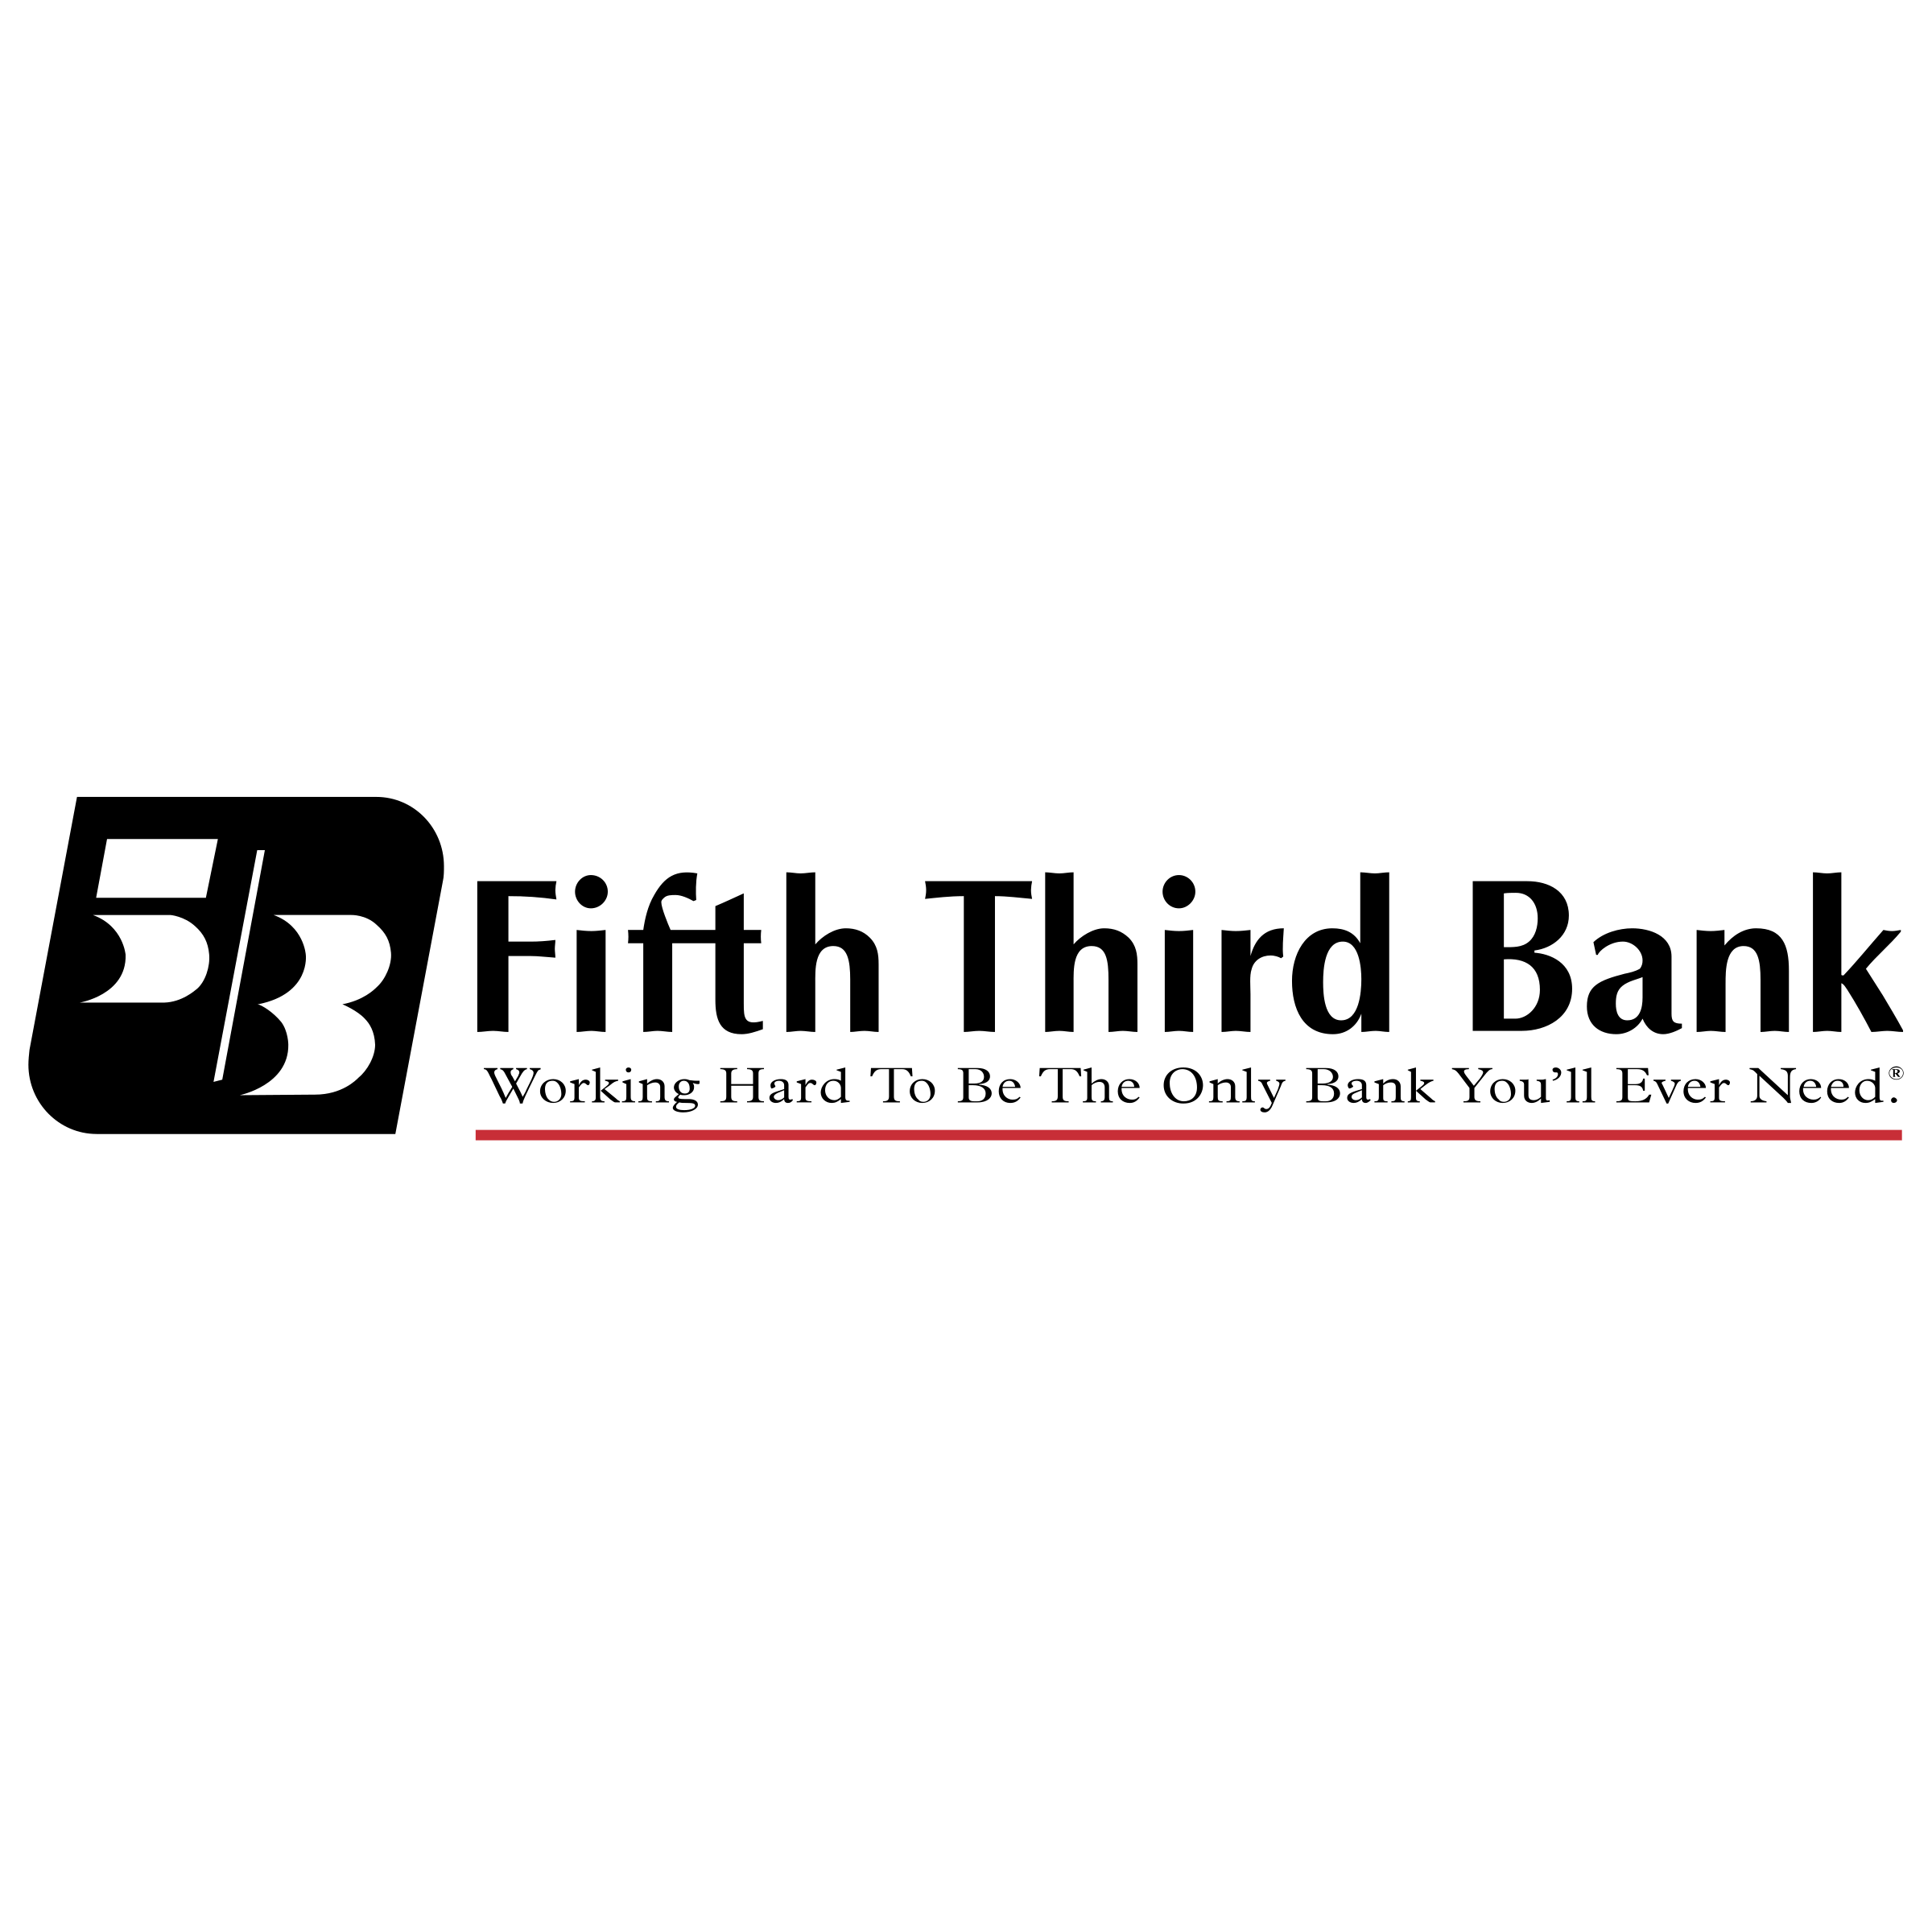 Fifth Third Bank Logo - Fifth Third Bank Logo PNG Transparent & SVG Vector - Freebie Supply